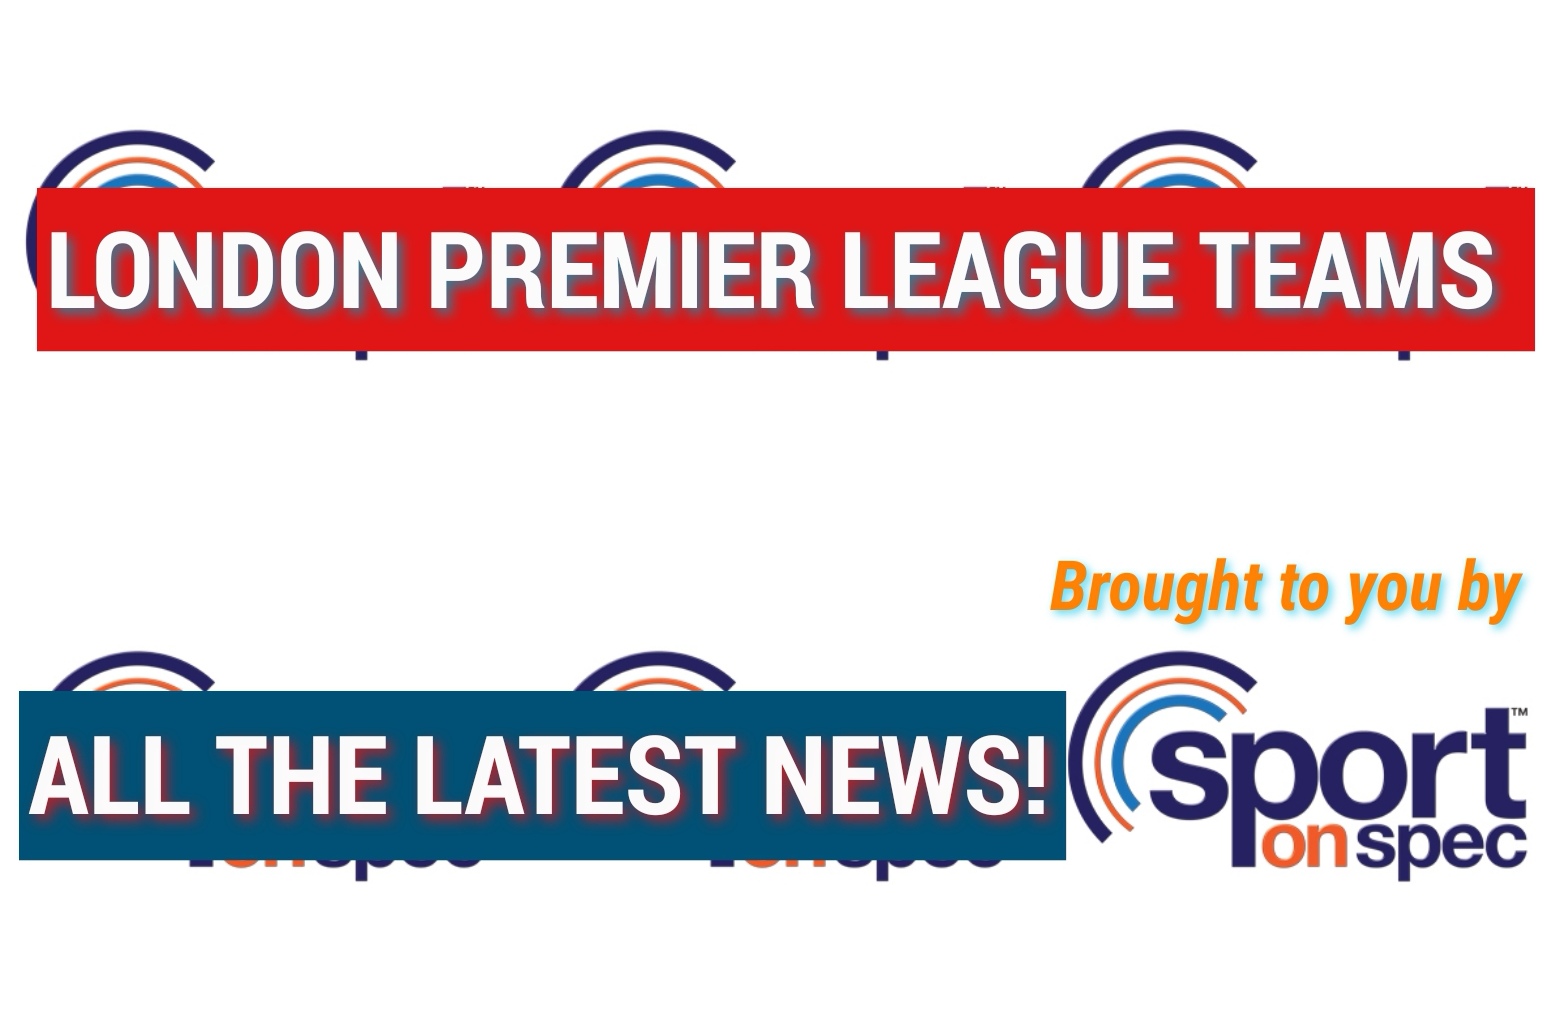 London Premier League teams ⚽️ Football Ticket news